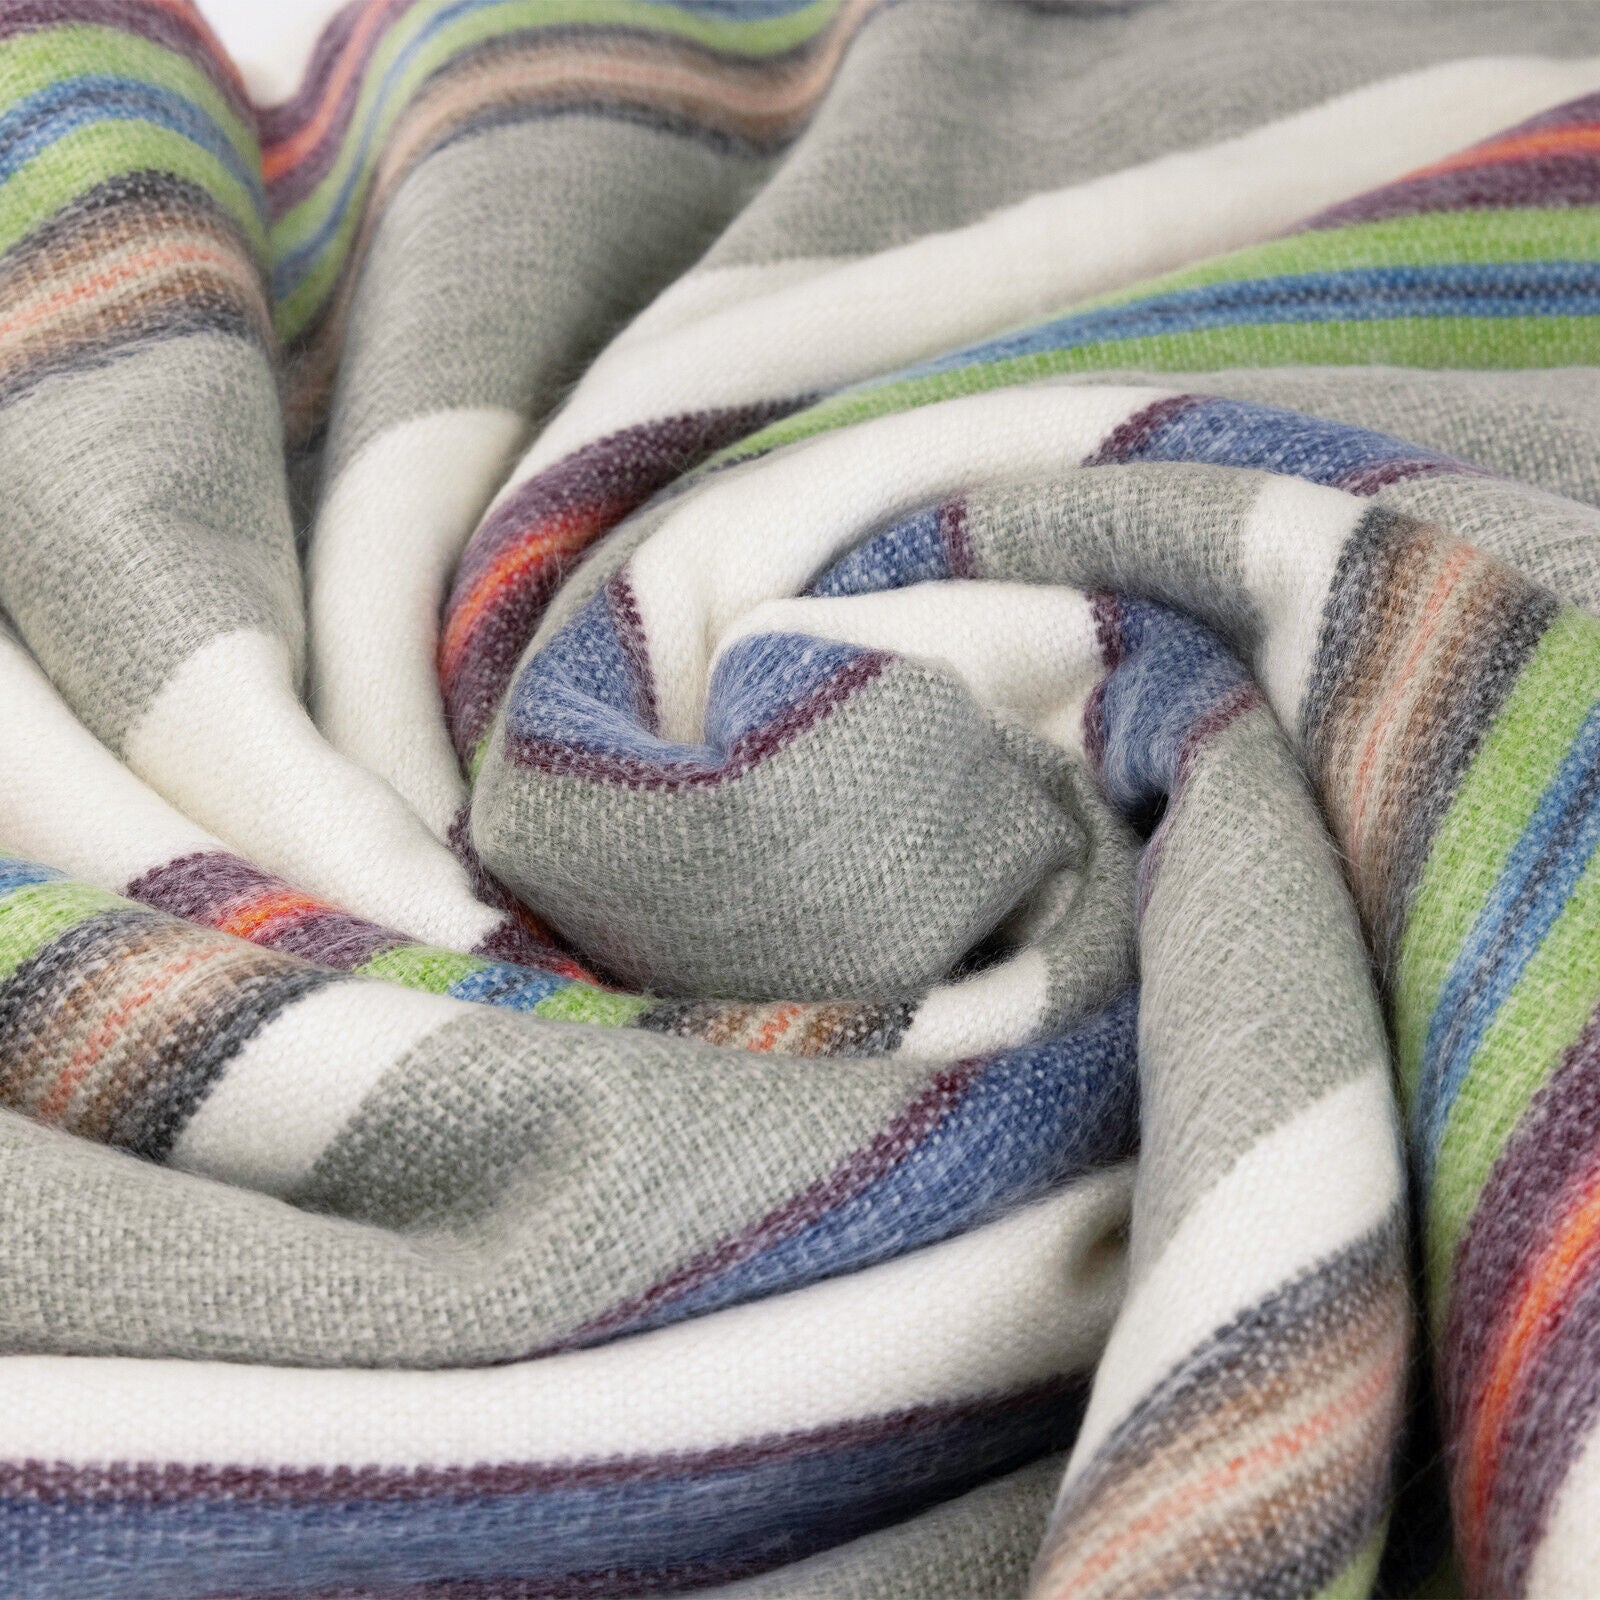 Zuro - Baby Alpaca Wool Throw Blanket / Sofa Cover - Queen 95 x 67 in - pastel colors